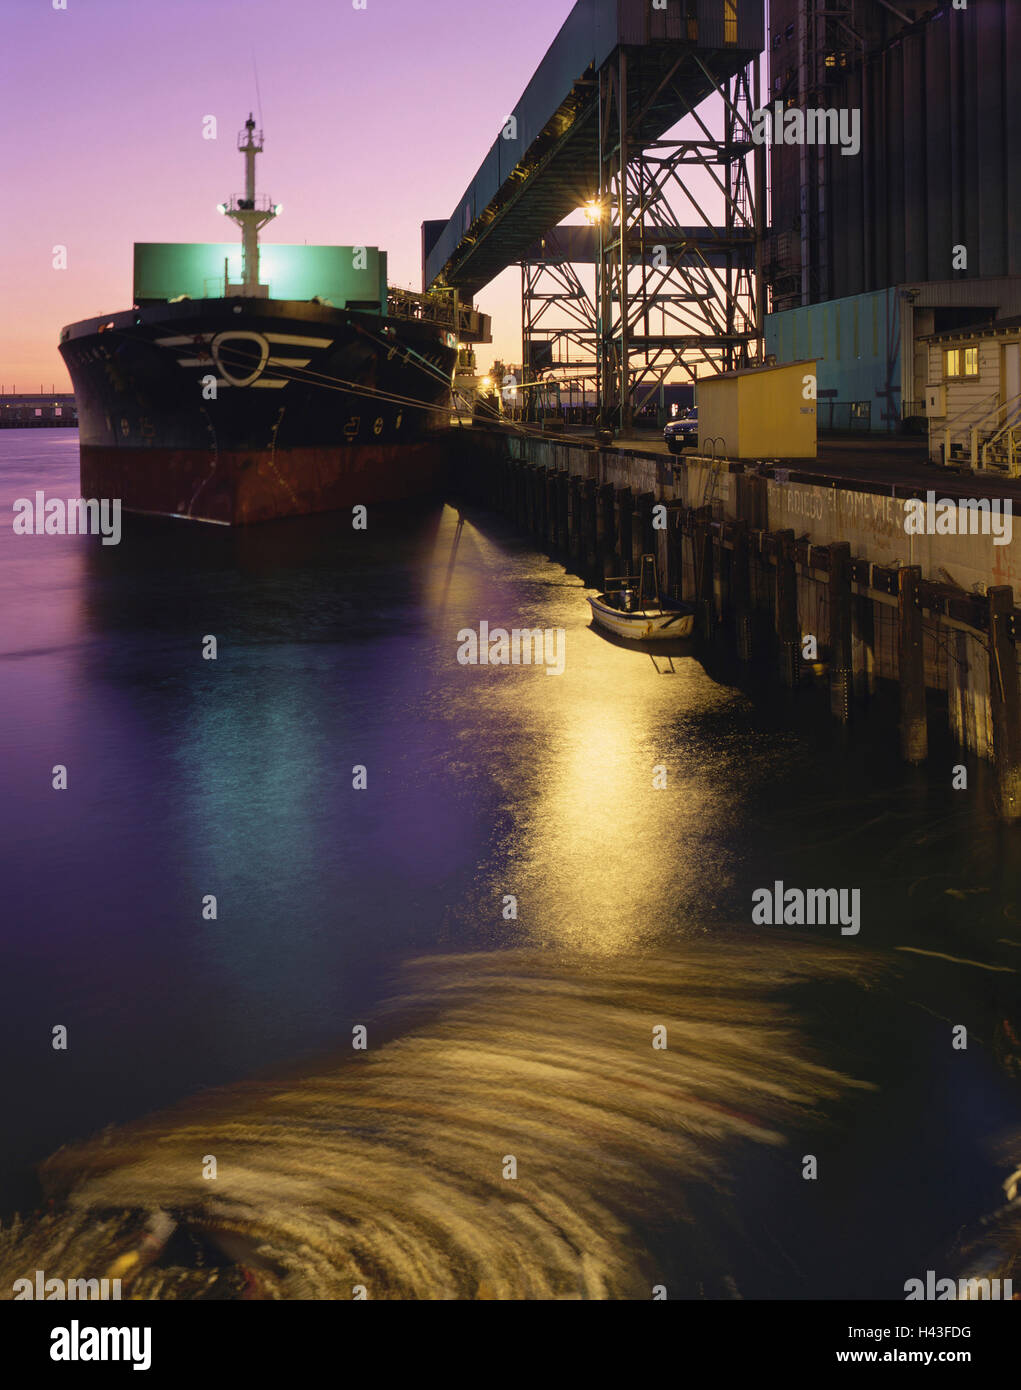 Cargo ship in harbor at night Stock Photo